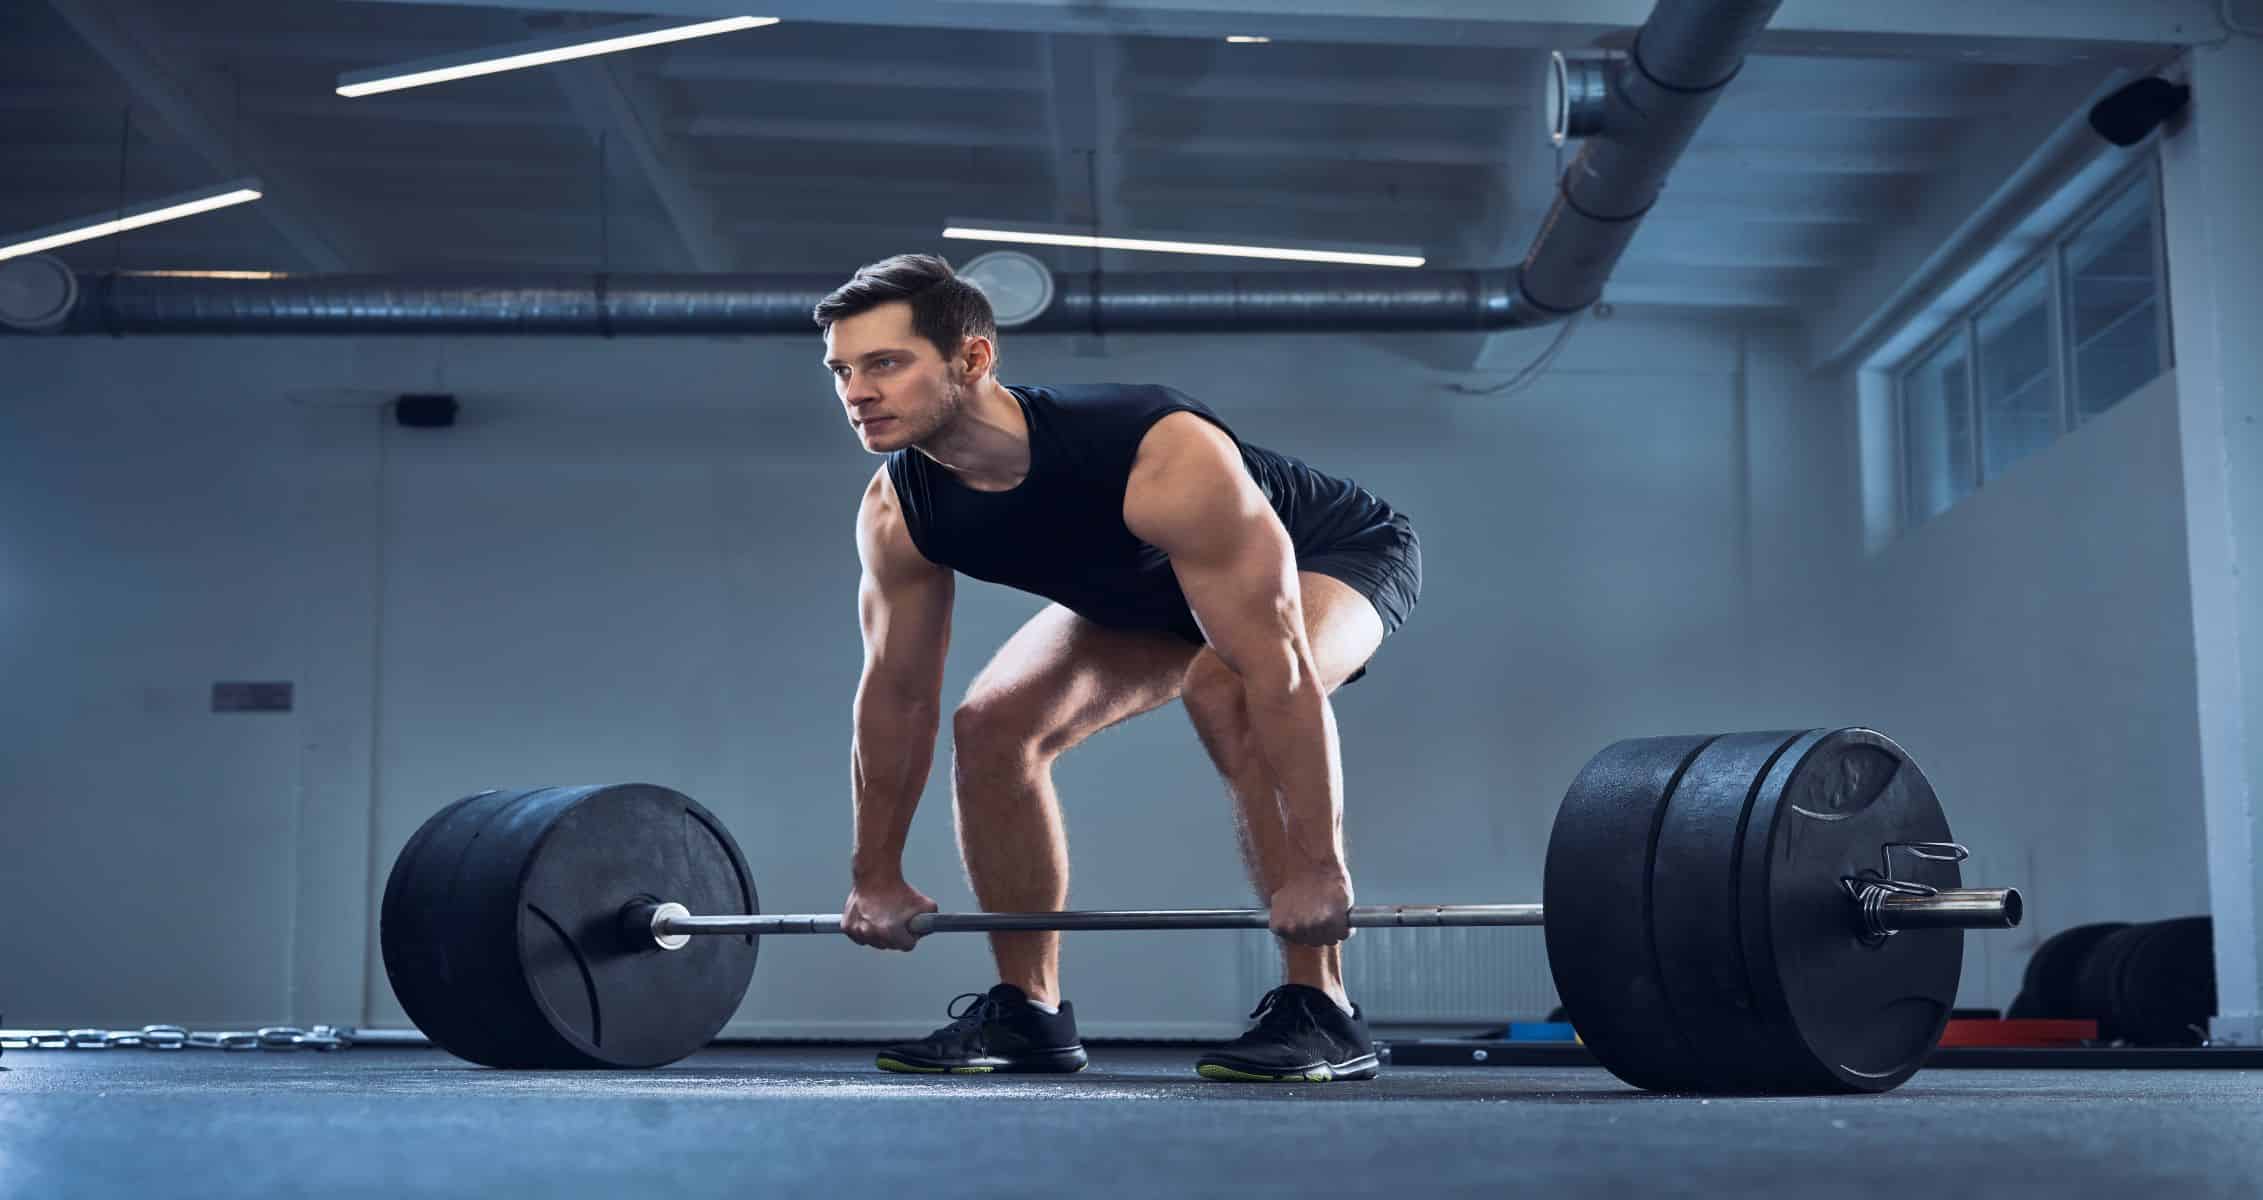 man-doing-barbell-exercise-at-gym-during-weight-li-2022-03-08-01-03-53-utc.jpg